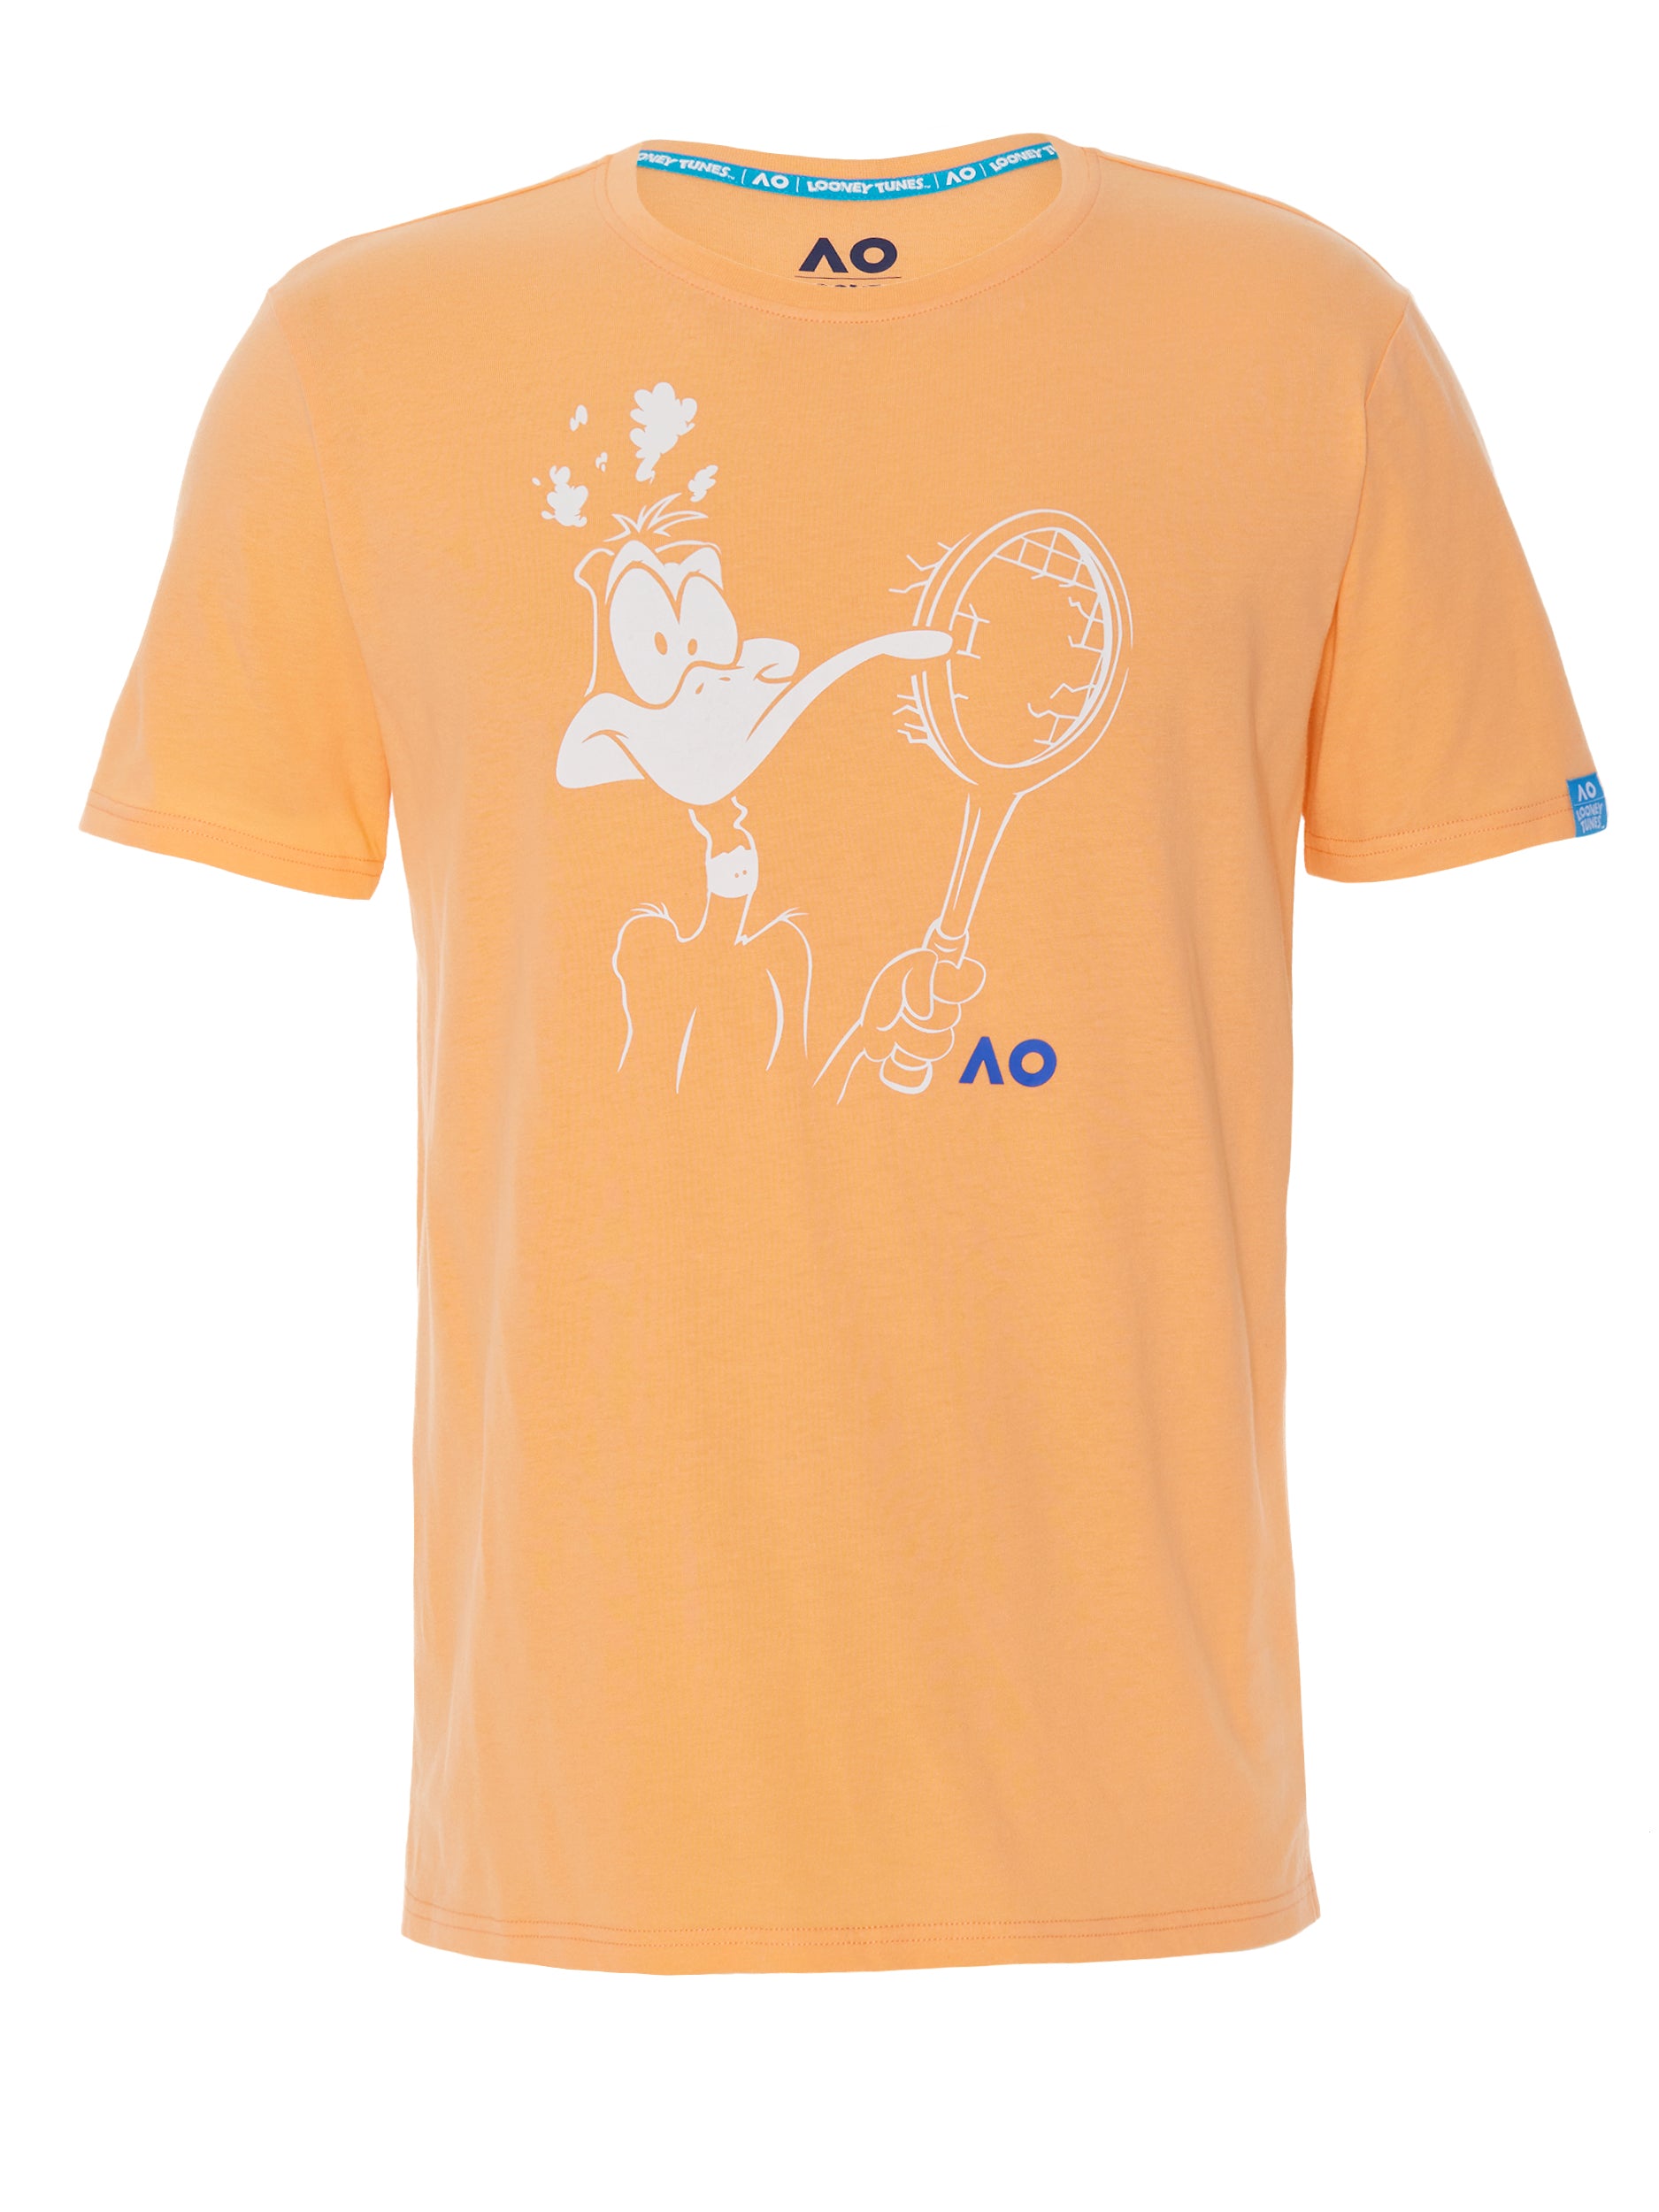 T-Shirt - Men's Daffy Duck Print - Orange